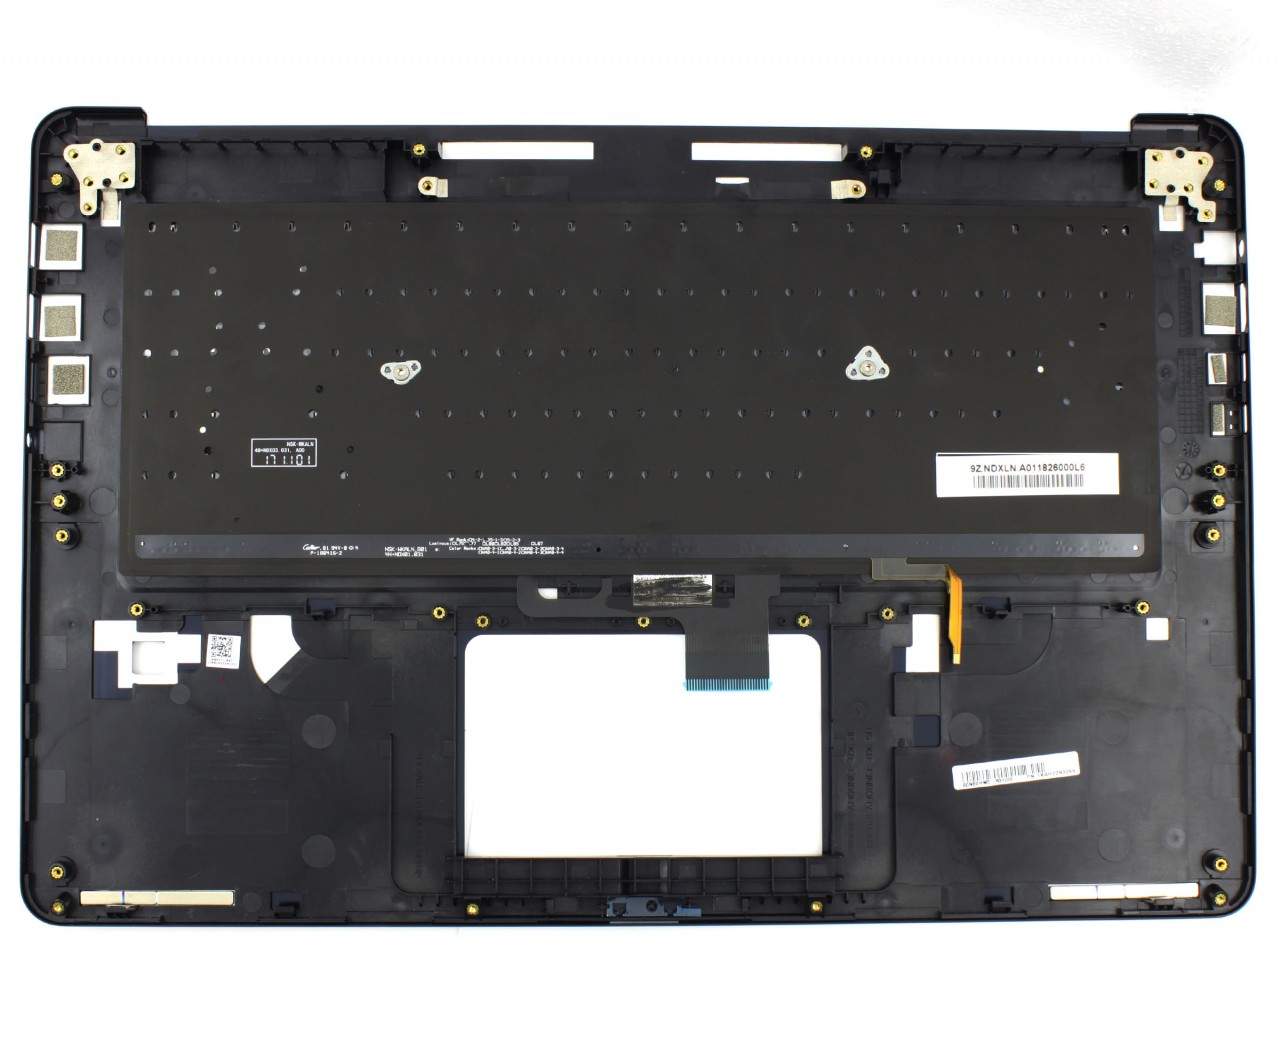 Tastatura Asus 13NB0HV3AM0501 Neagra cu Palmrest Albastru Inchis iluminata backlit image3